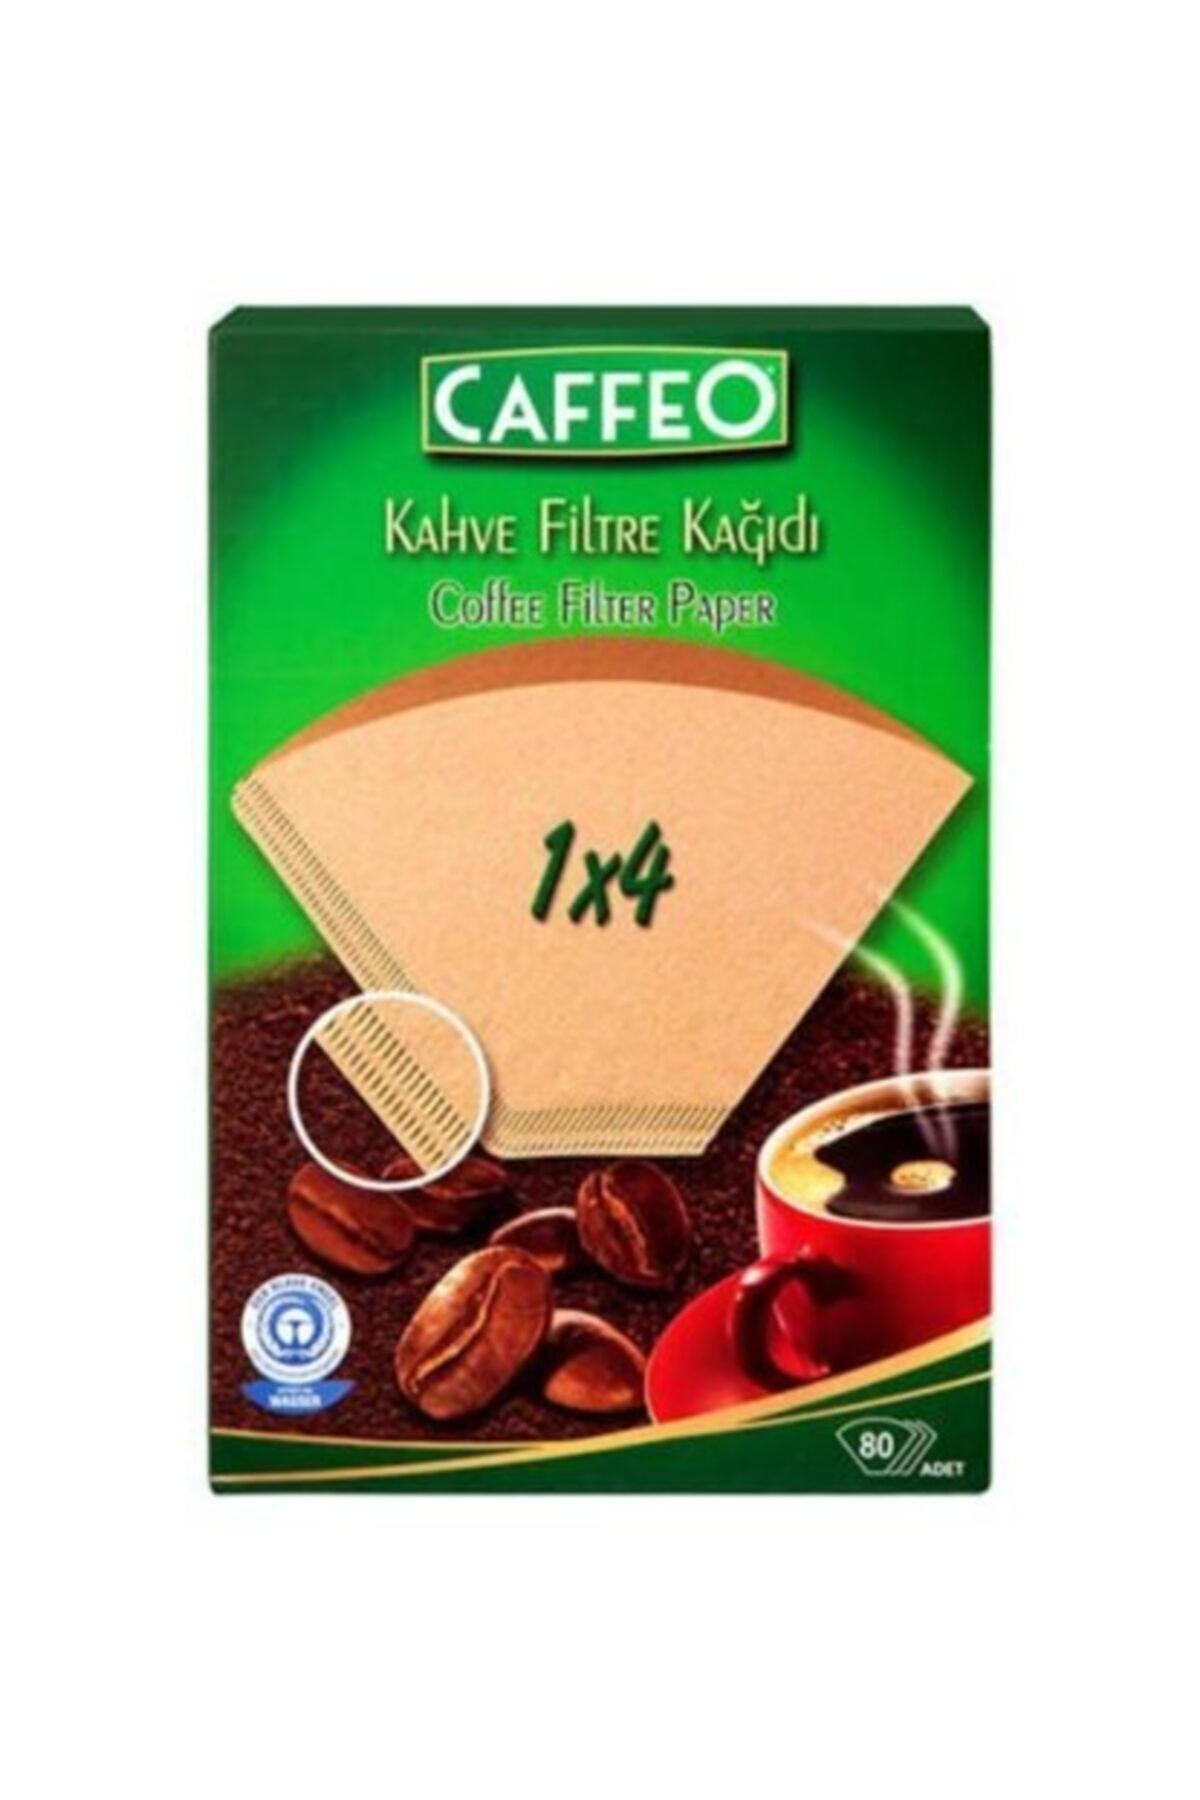 Caffeo Kahve Filtresi 1x4 80'li